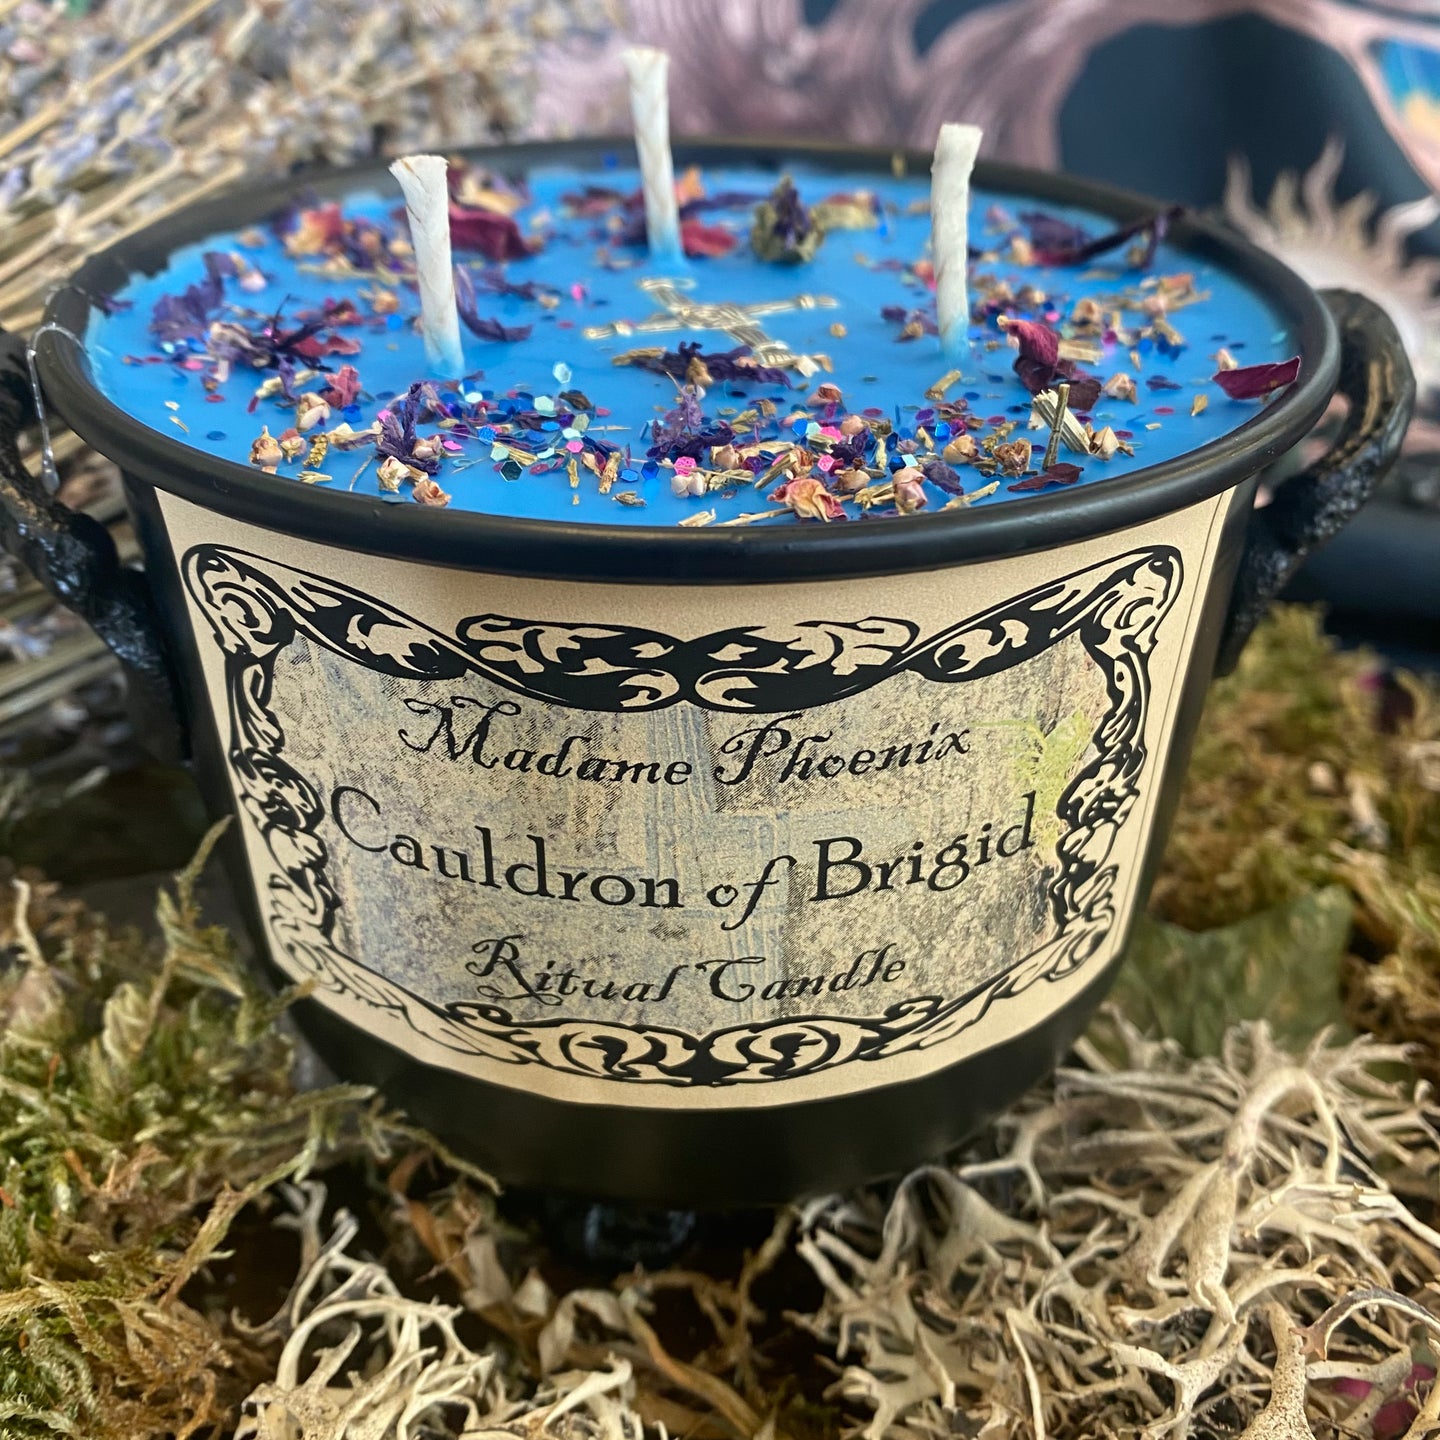 Cauldron of Brigid Imbolc Goddess Altar Spell Candle